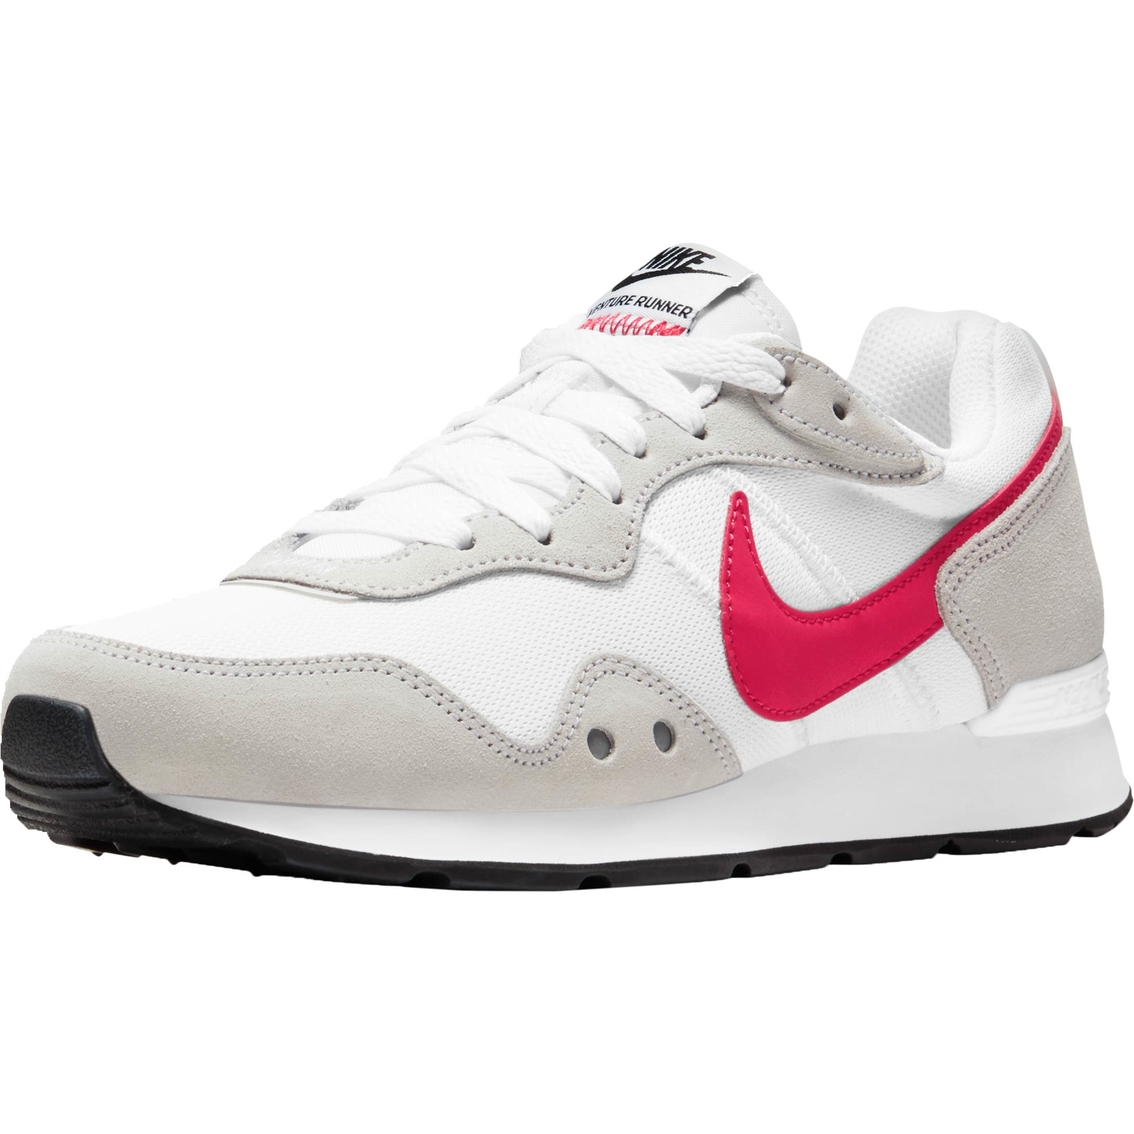 Nike Women's Venture Runner Running Shoes | Sneakers | Shoes | Shop The ...